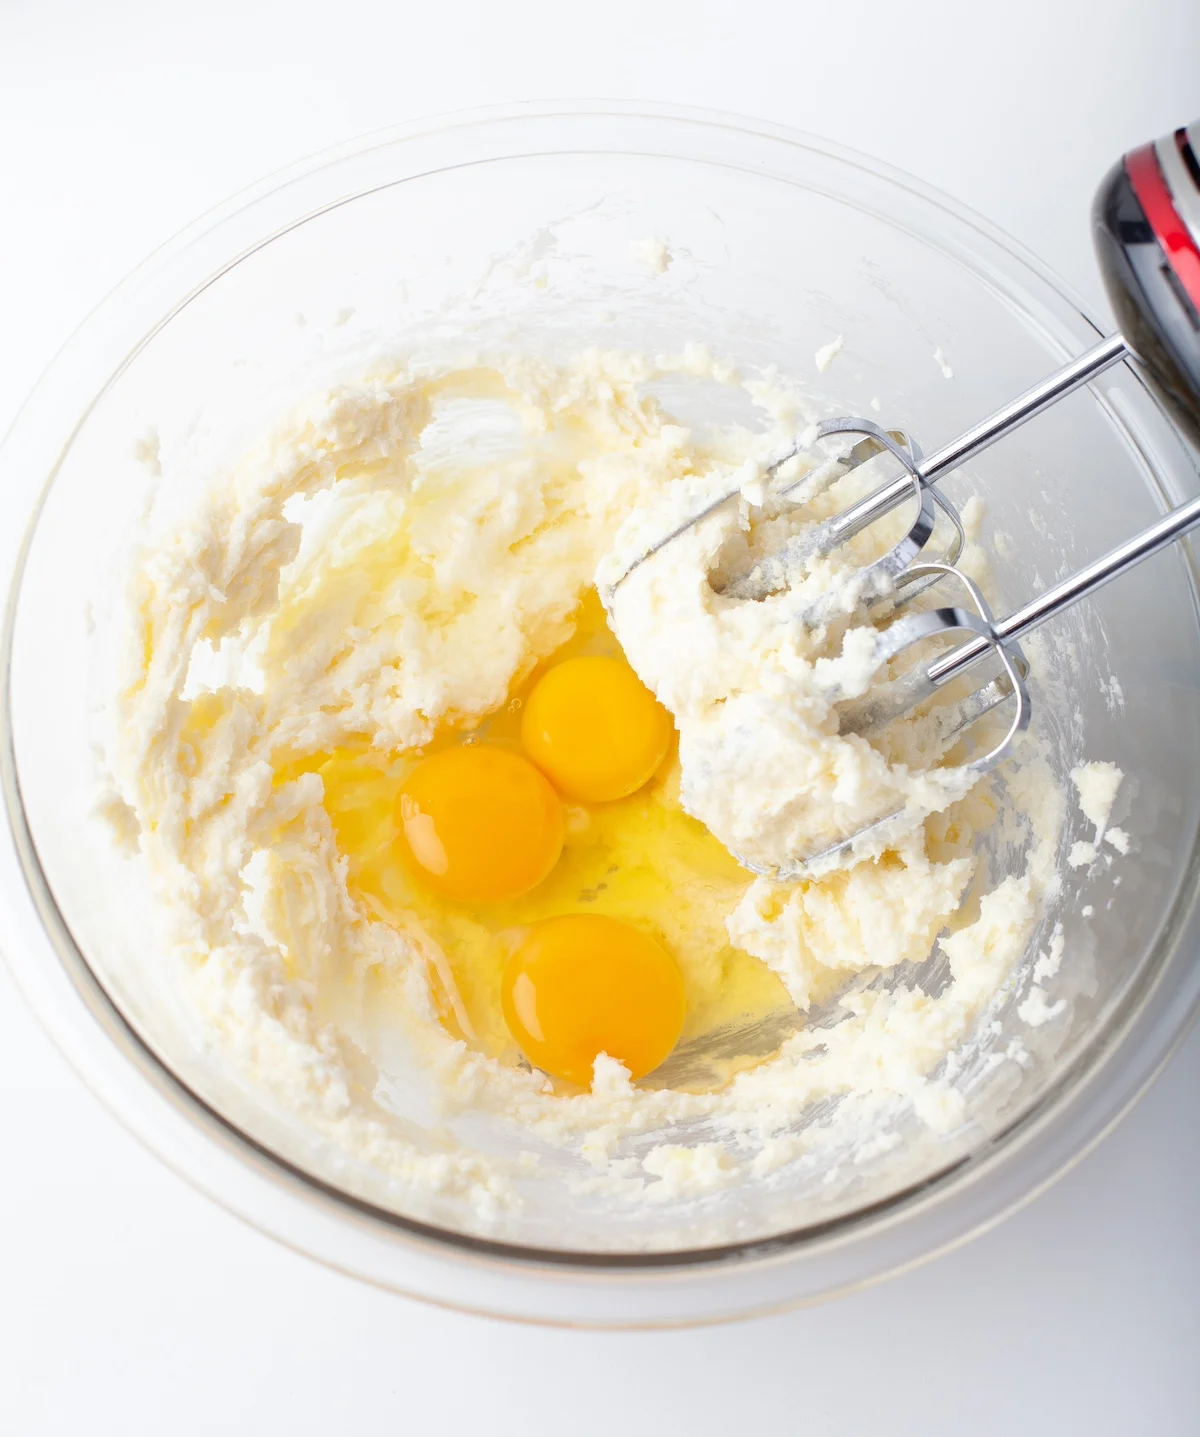 Adding lemon juice, zest, and eggs into the butter mixture